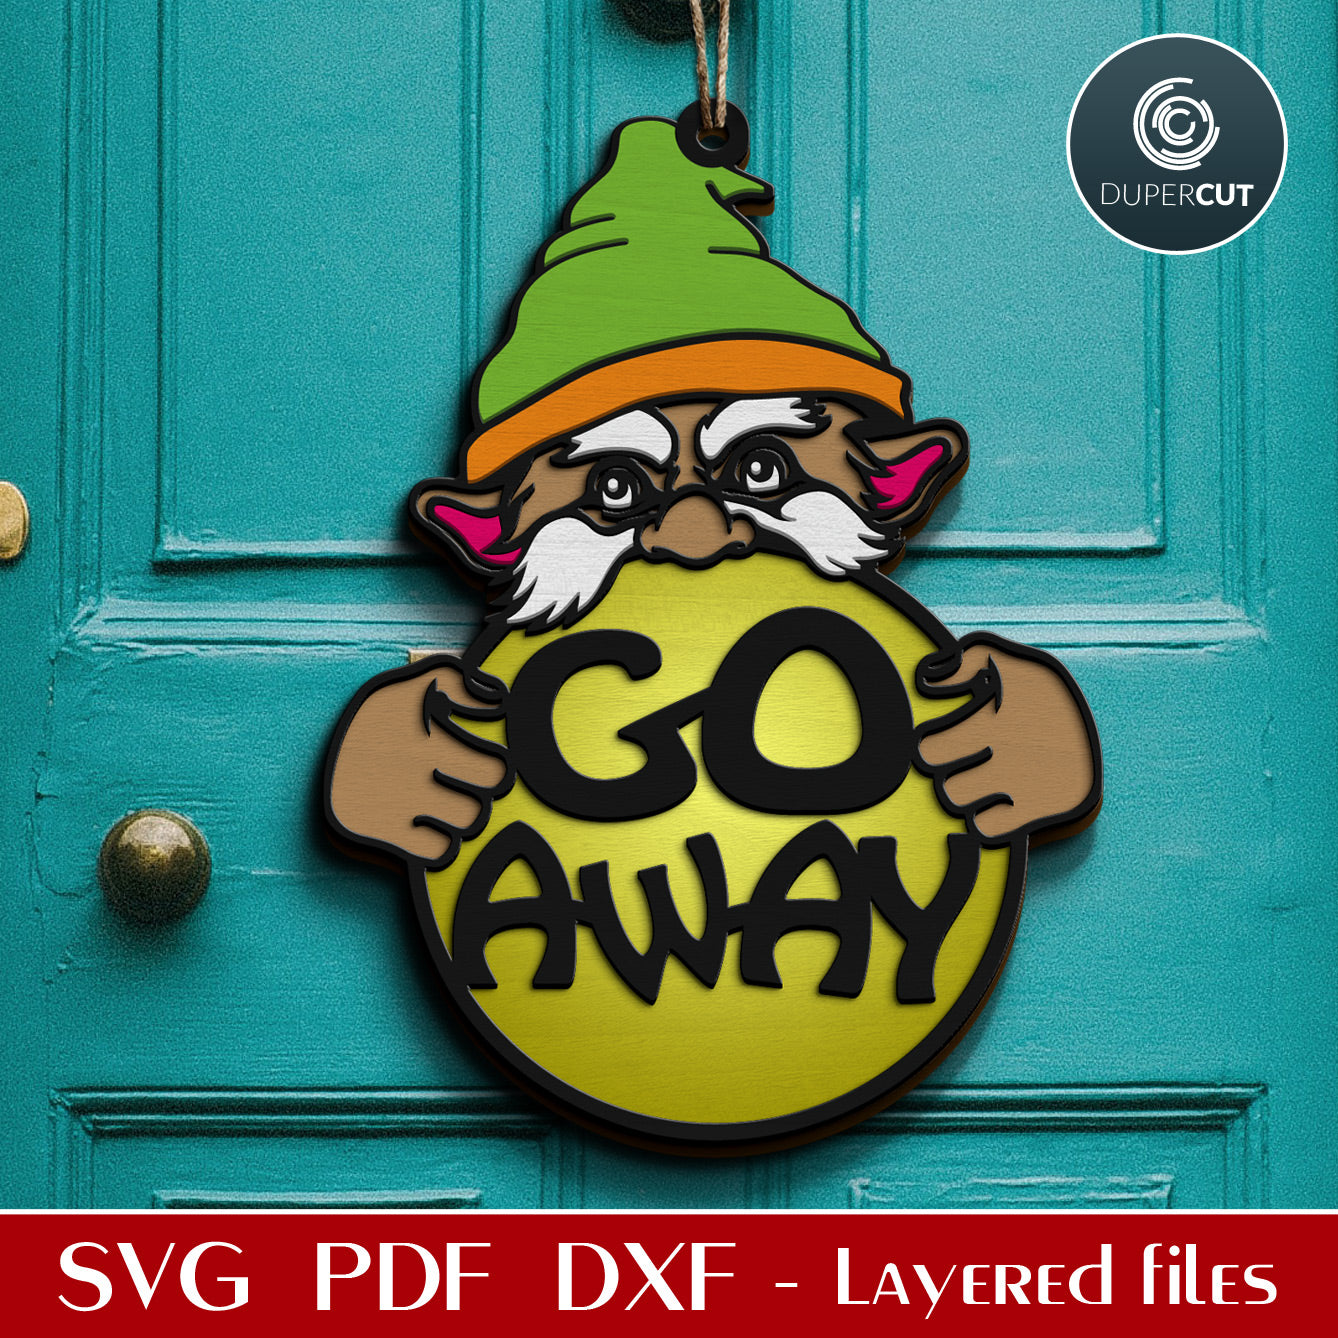 Grumpy Gnome Go Away sign door hanger - SVG DXF layered cutting files for Glowforge, Cricut, Silhouette, CNC plasma machines, scroll saw pattern by www.DuperCut.com